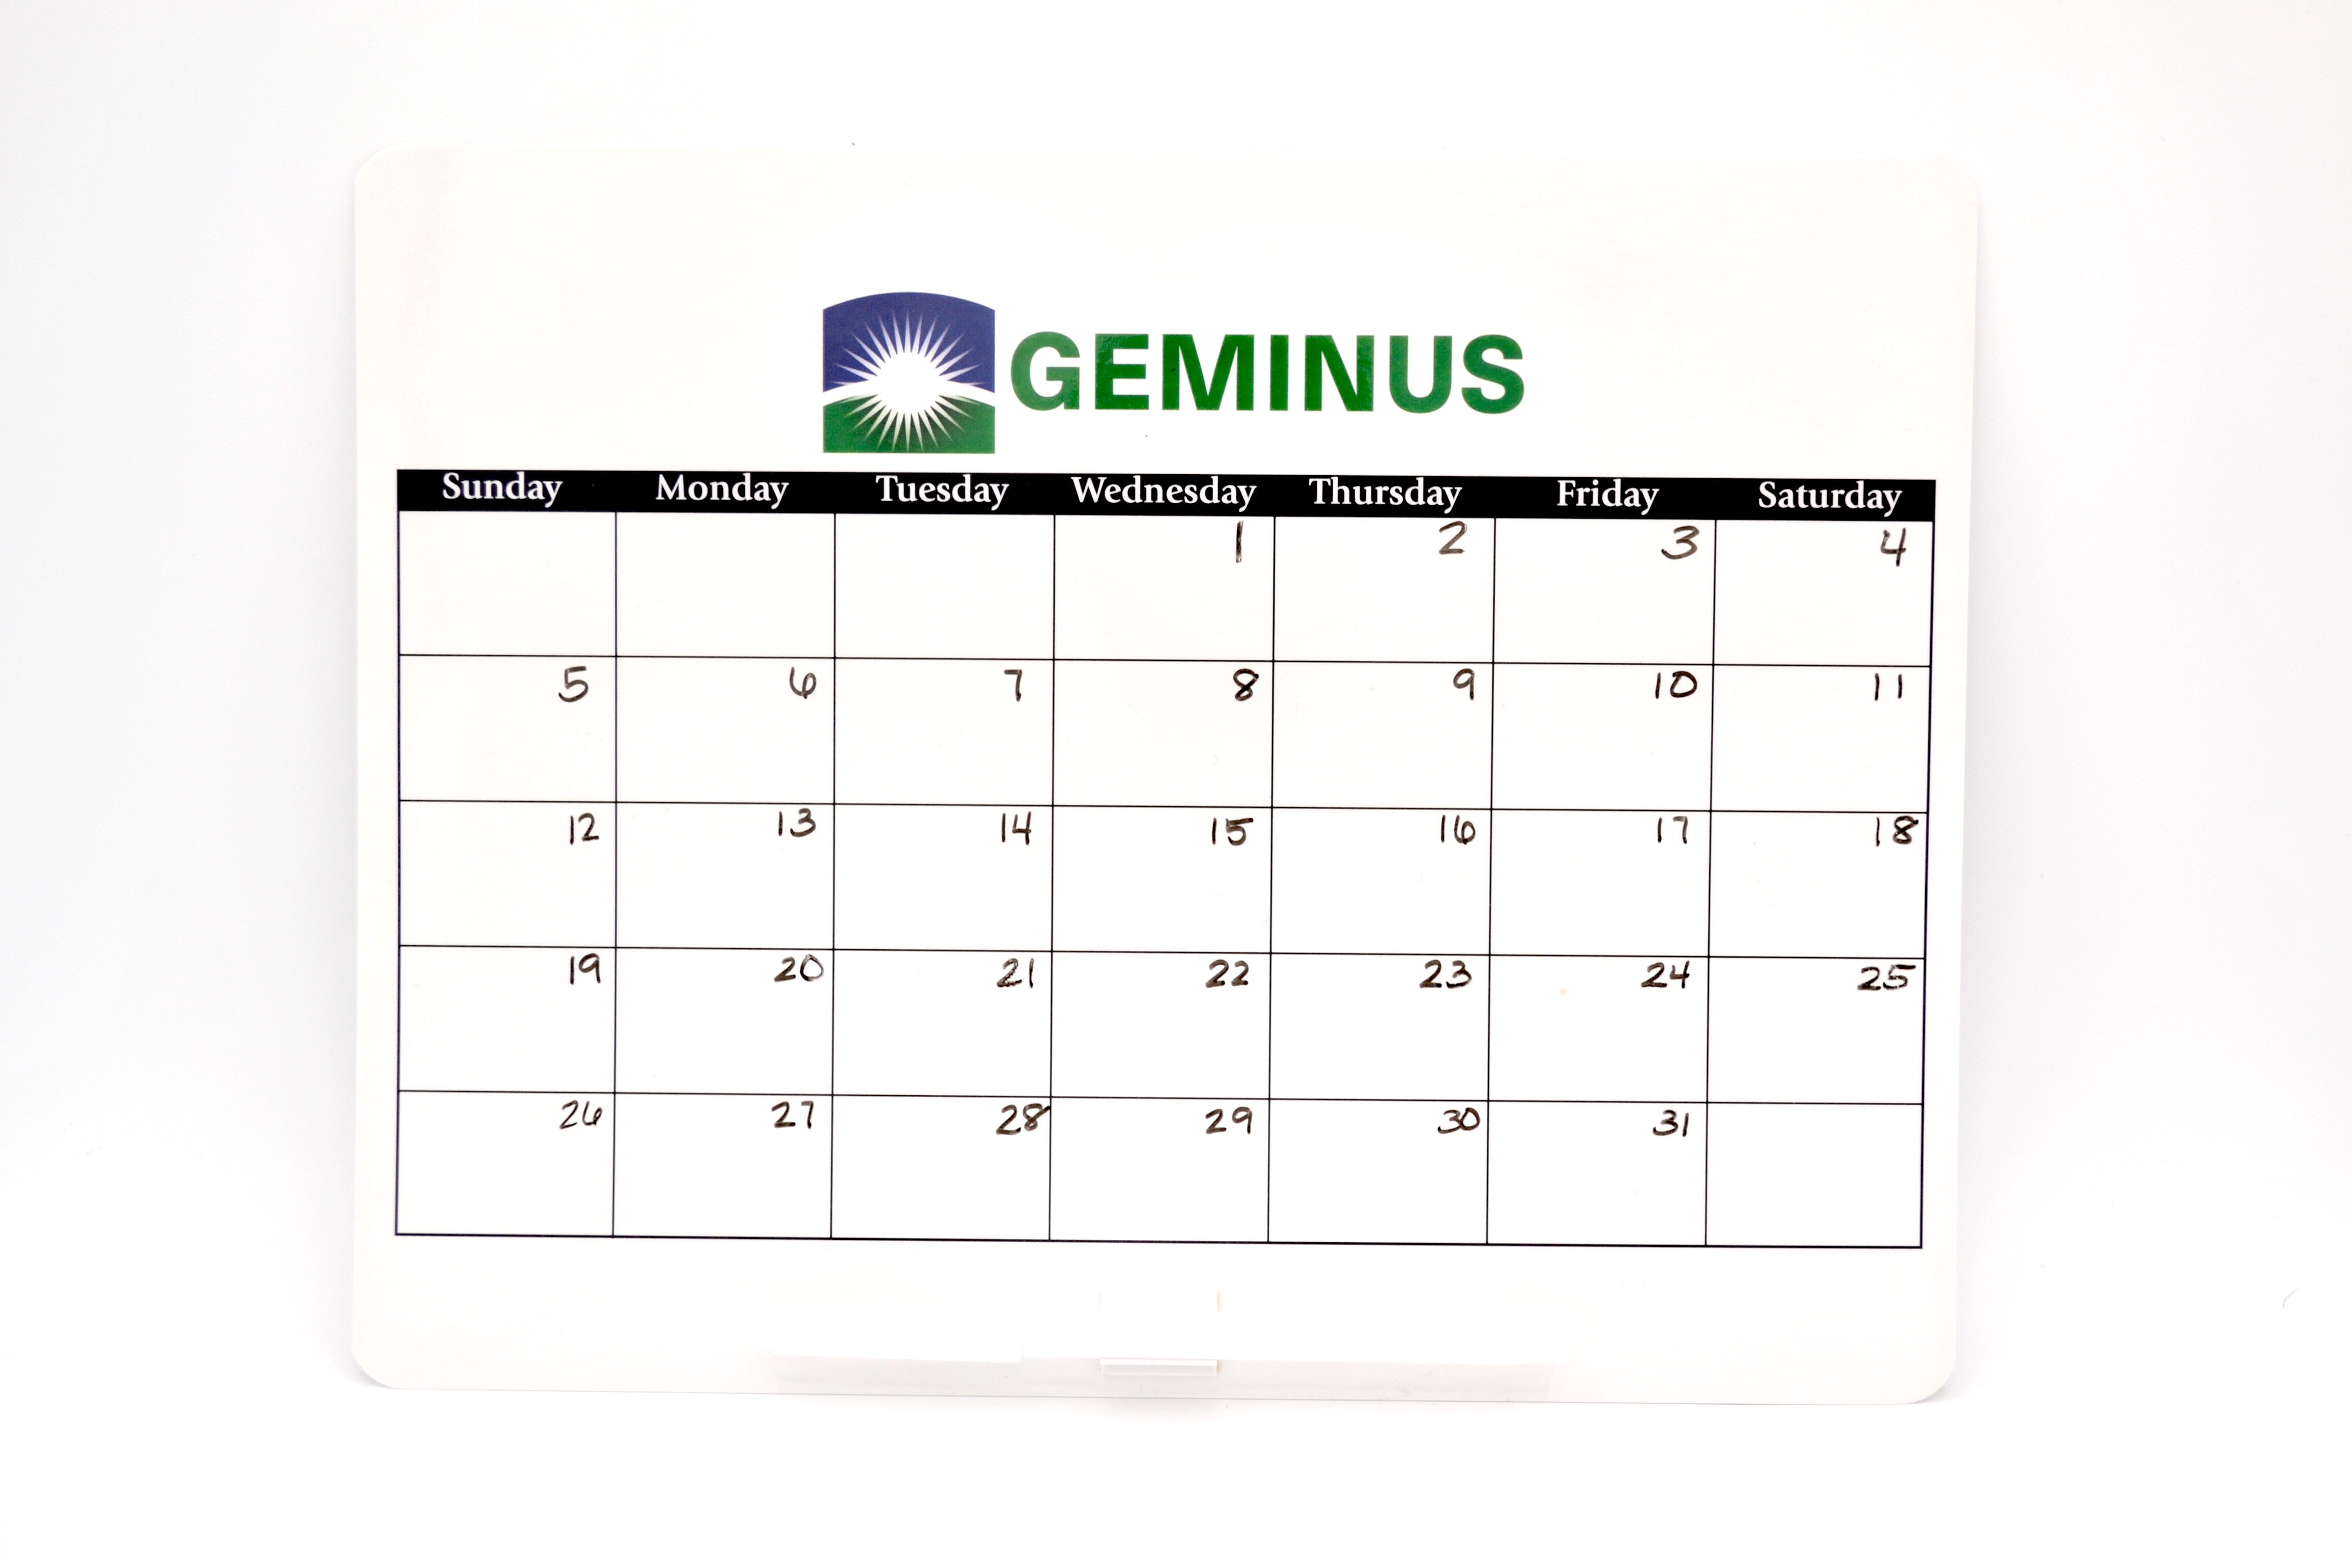  Geminus Calendar 